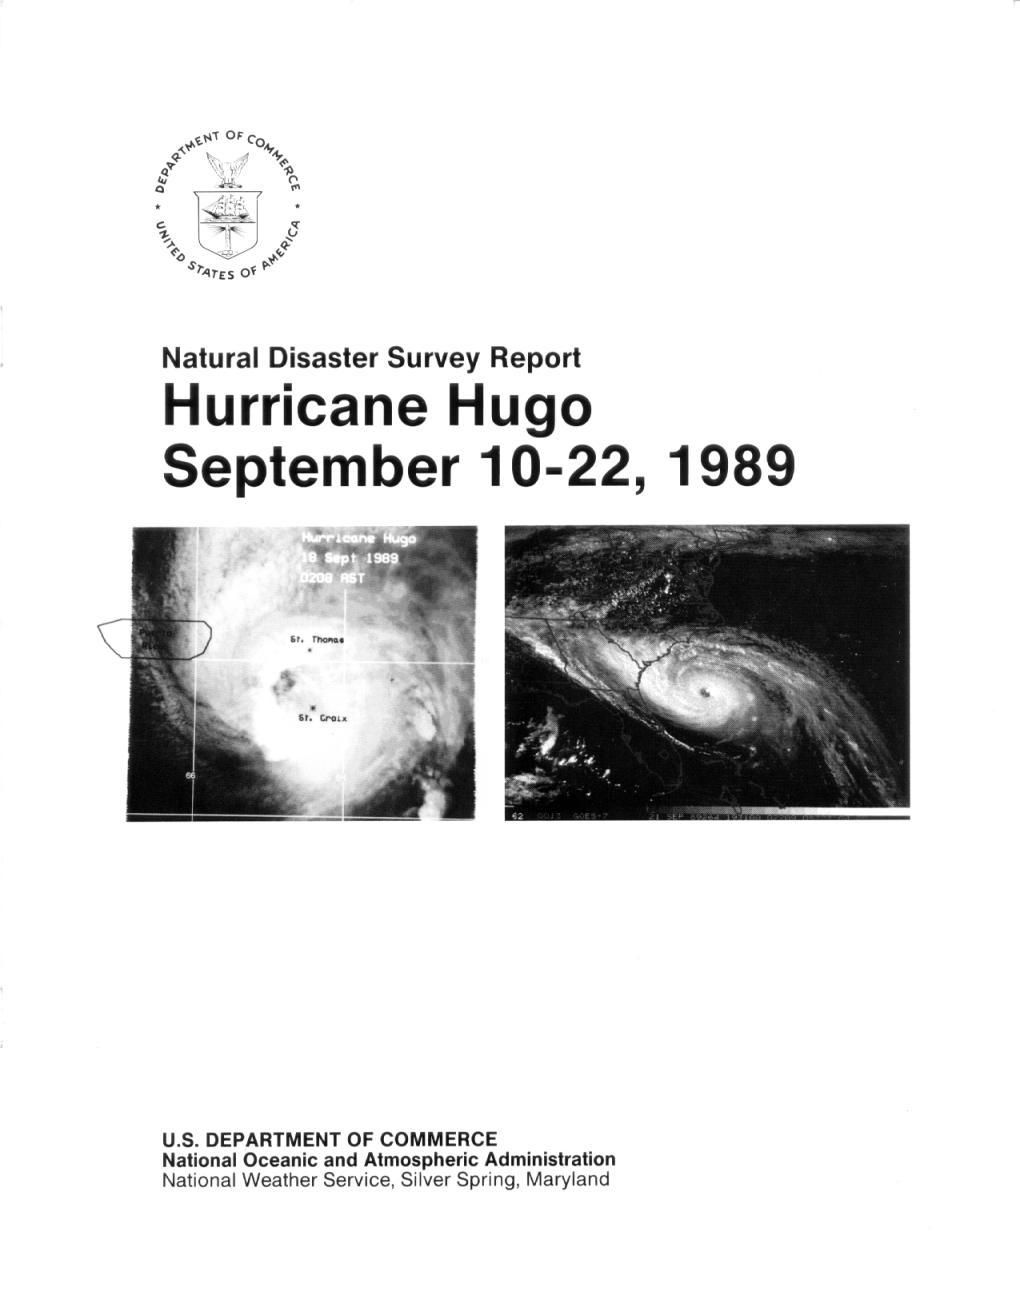 Hurricane Hugo Moving Through the U.S